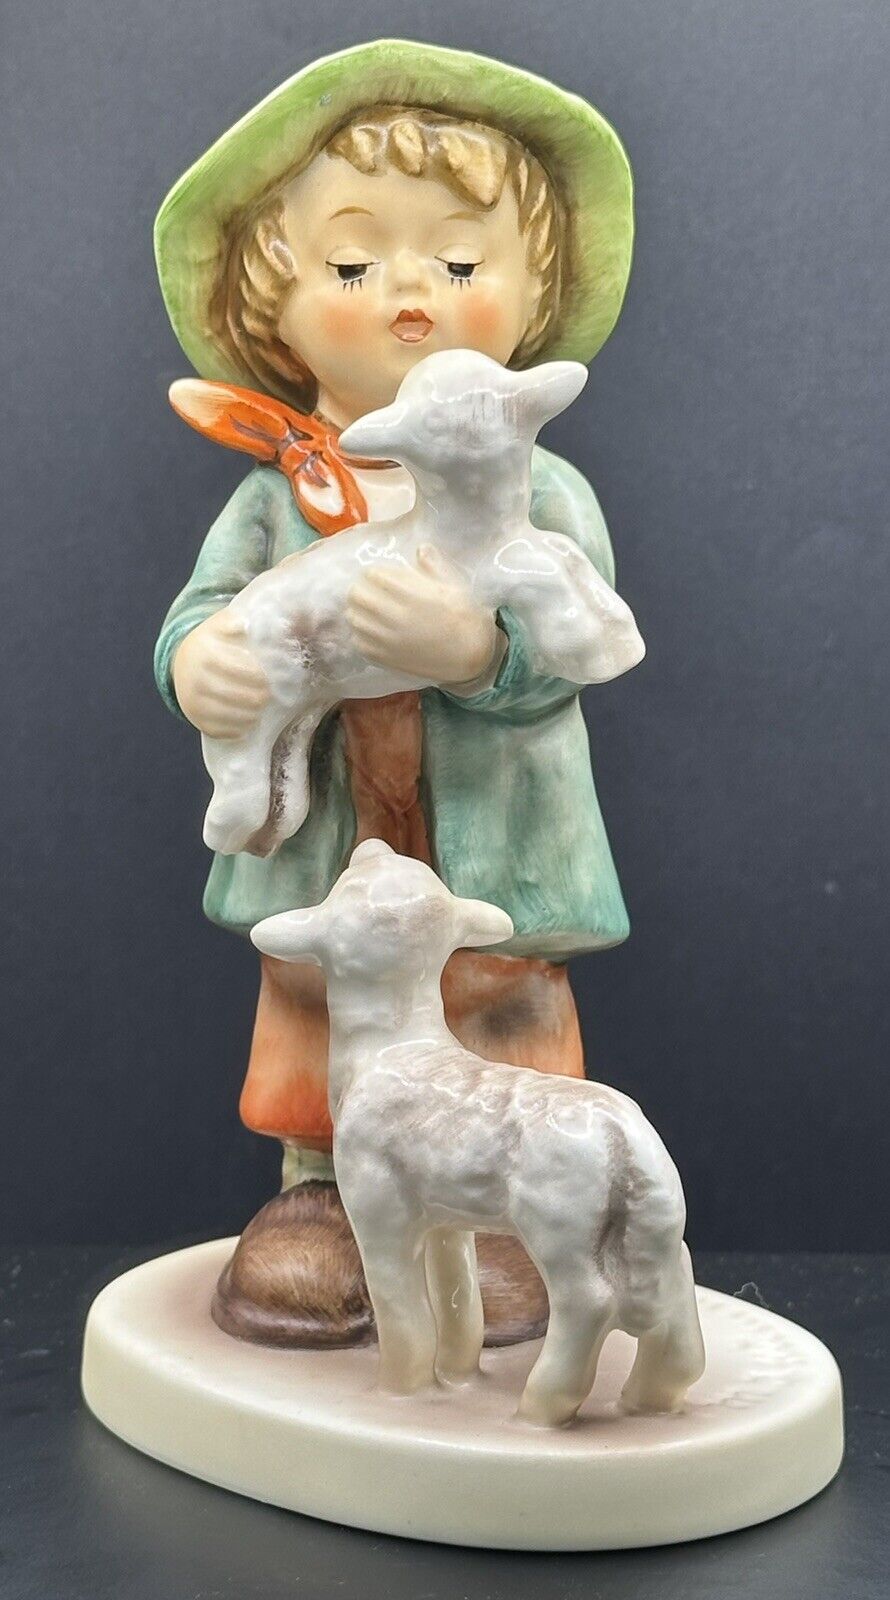 Goebel M.I. Hummel #64 "Shepherd's Boy" TMK6, 5.5" tall, Germany